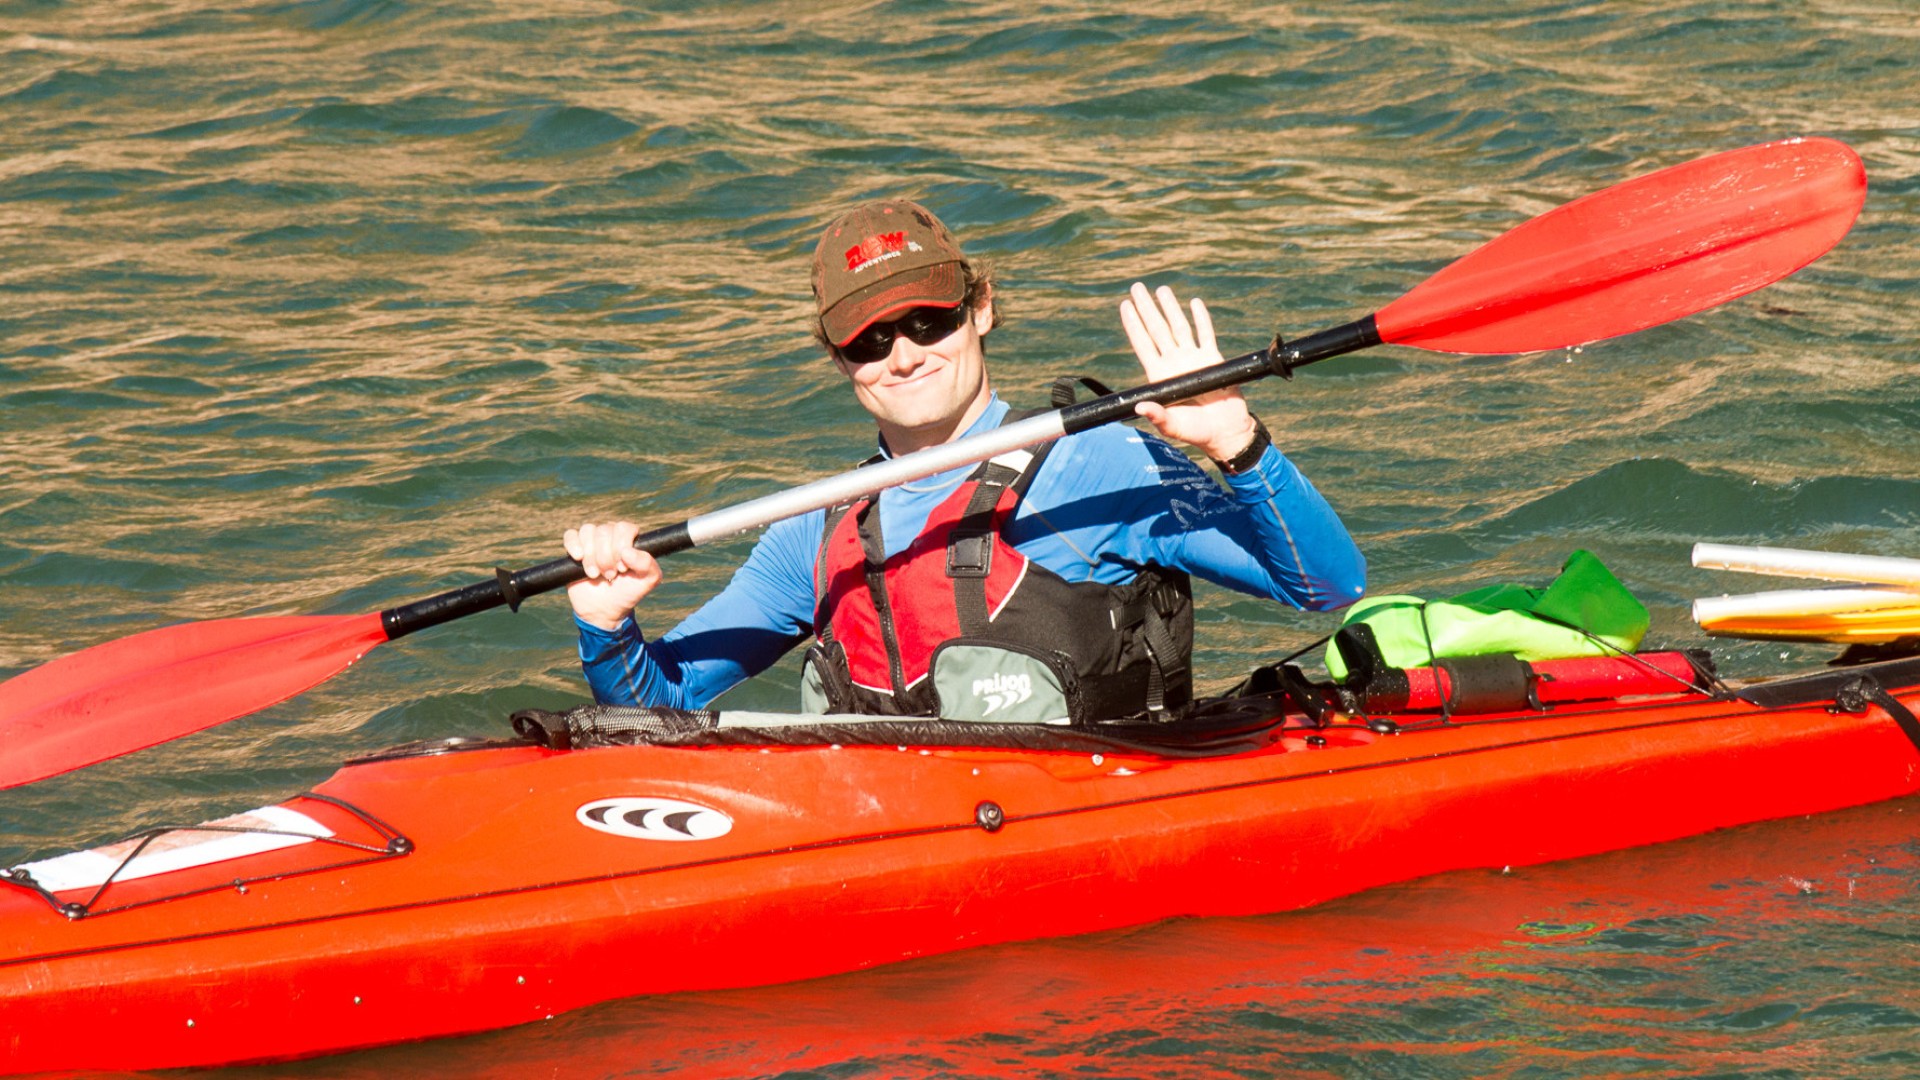 Sea kayaker on the Mediterranean Sea in a red kayak waving while holding their kayak paddle